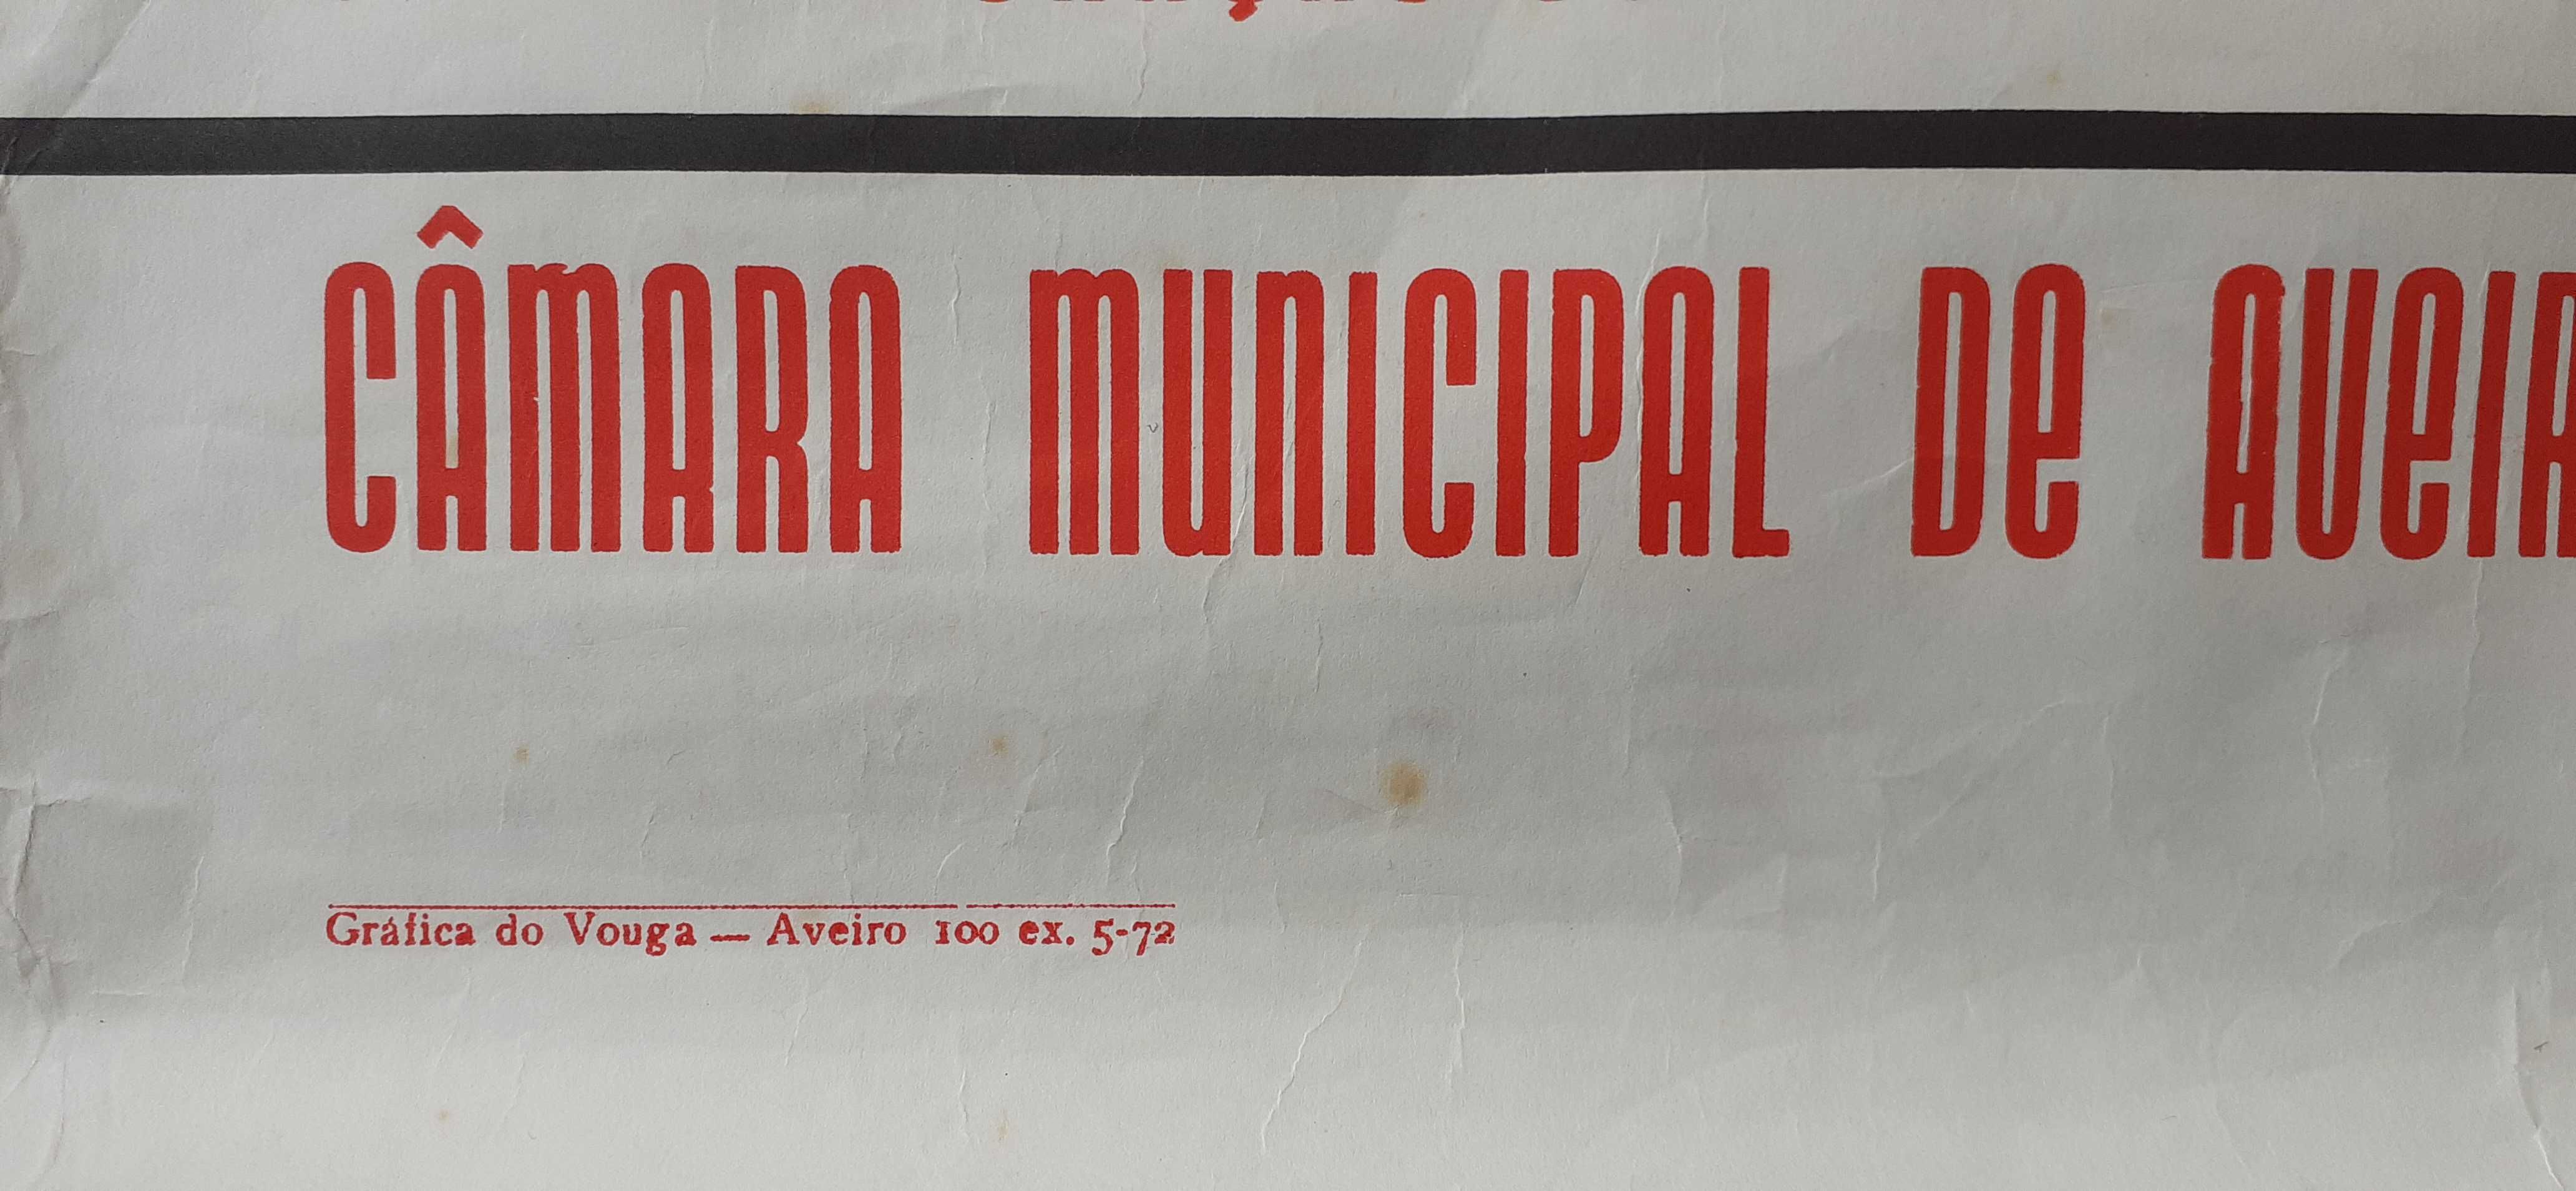 1972 Aveiro Princesa Santa Joana Cartaz / Poster 45x61cm 100ex.